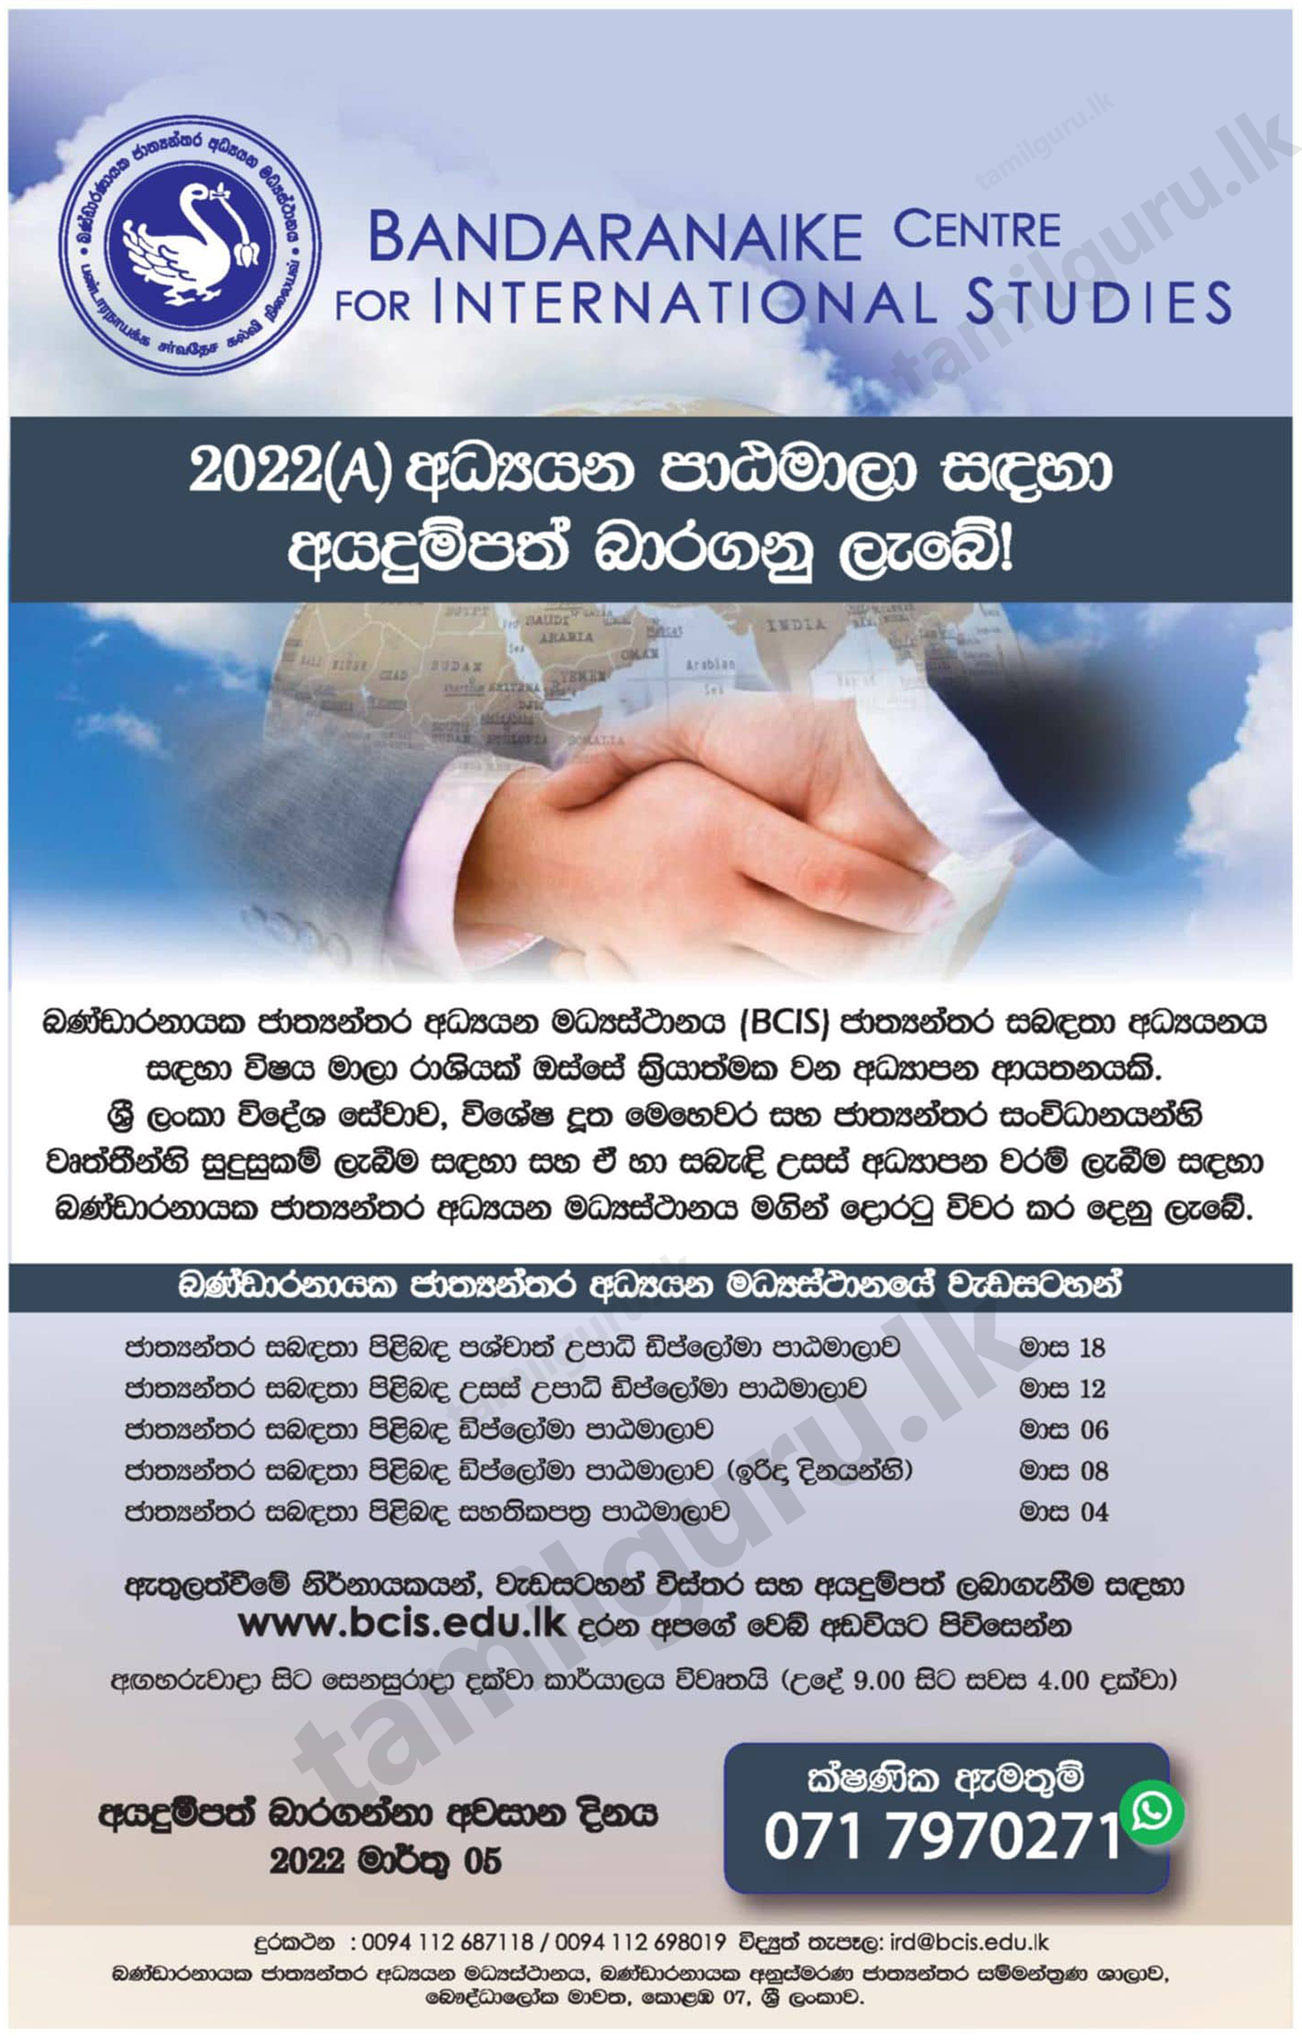 International Relations Courses 2022 (A) -Bandaranaike Centre for International Studies (BCIS)